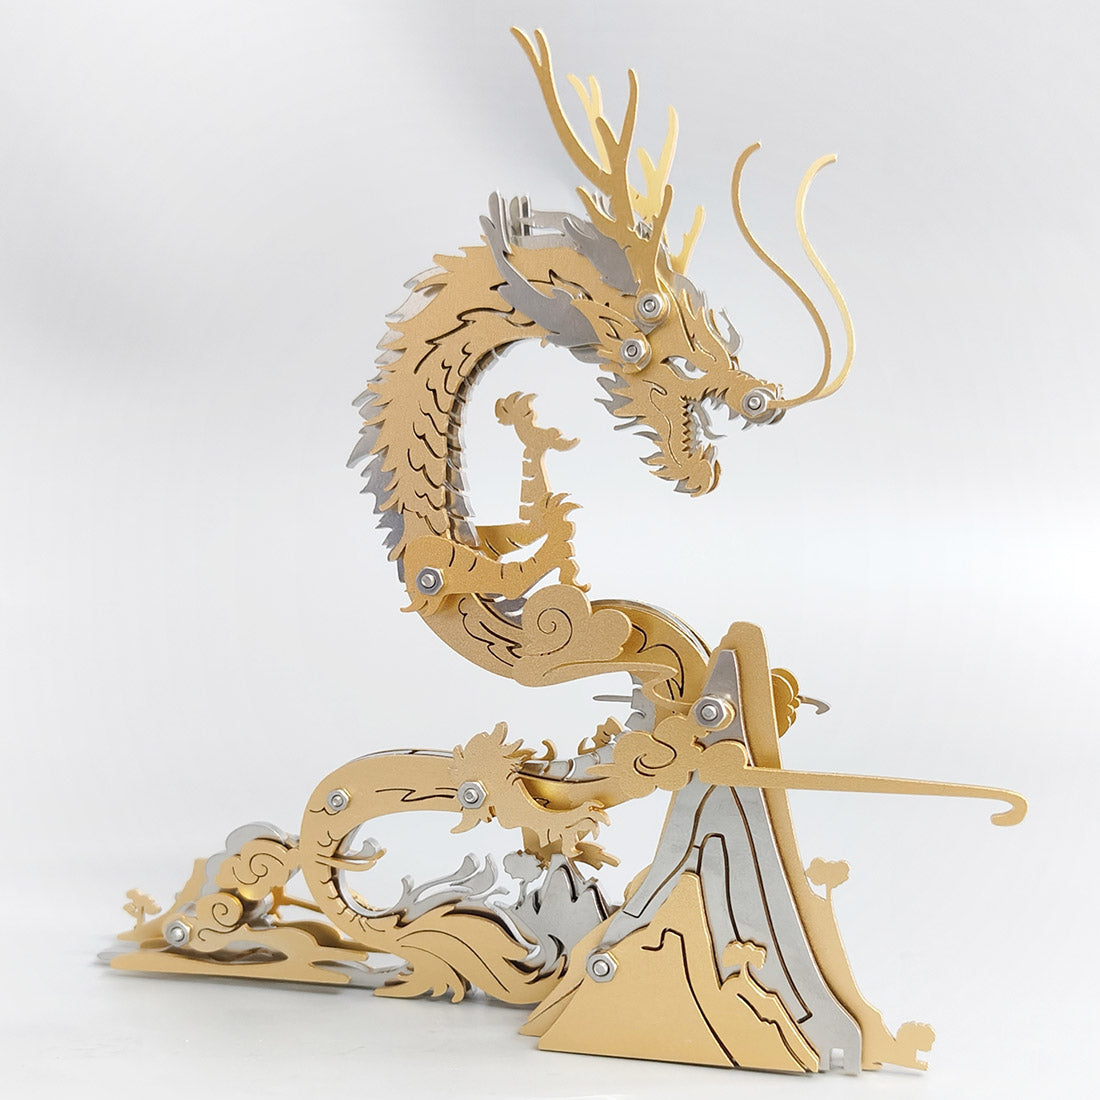 Set of 3 3D metal dragon charms in bronze metal 21x14mm